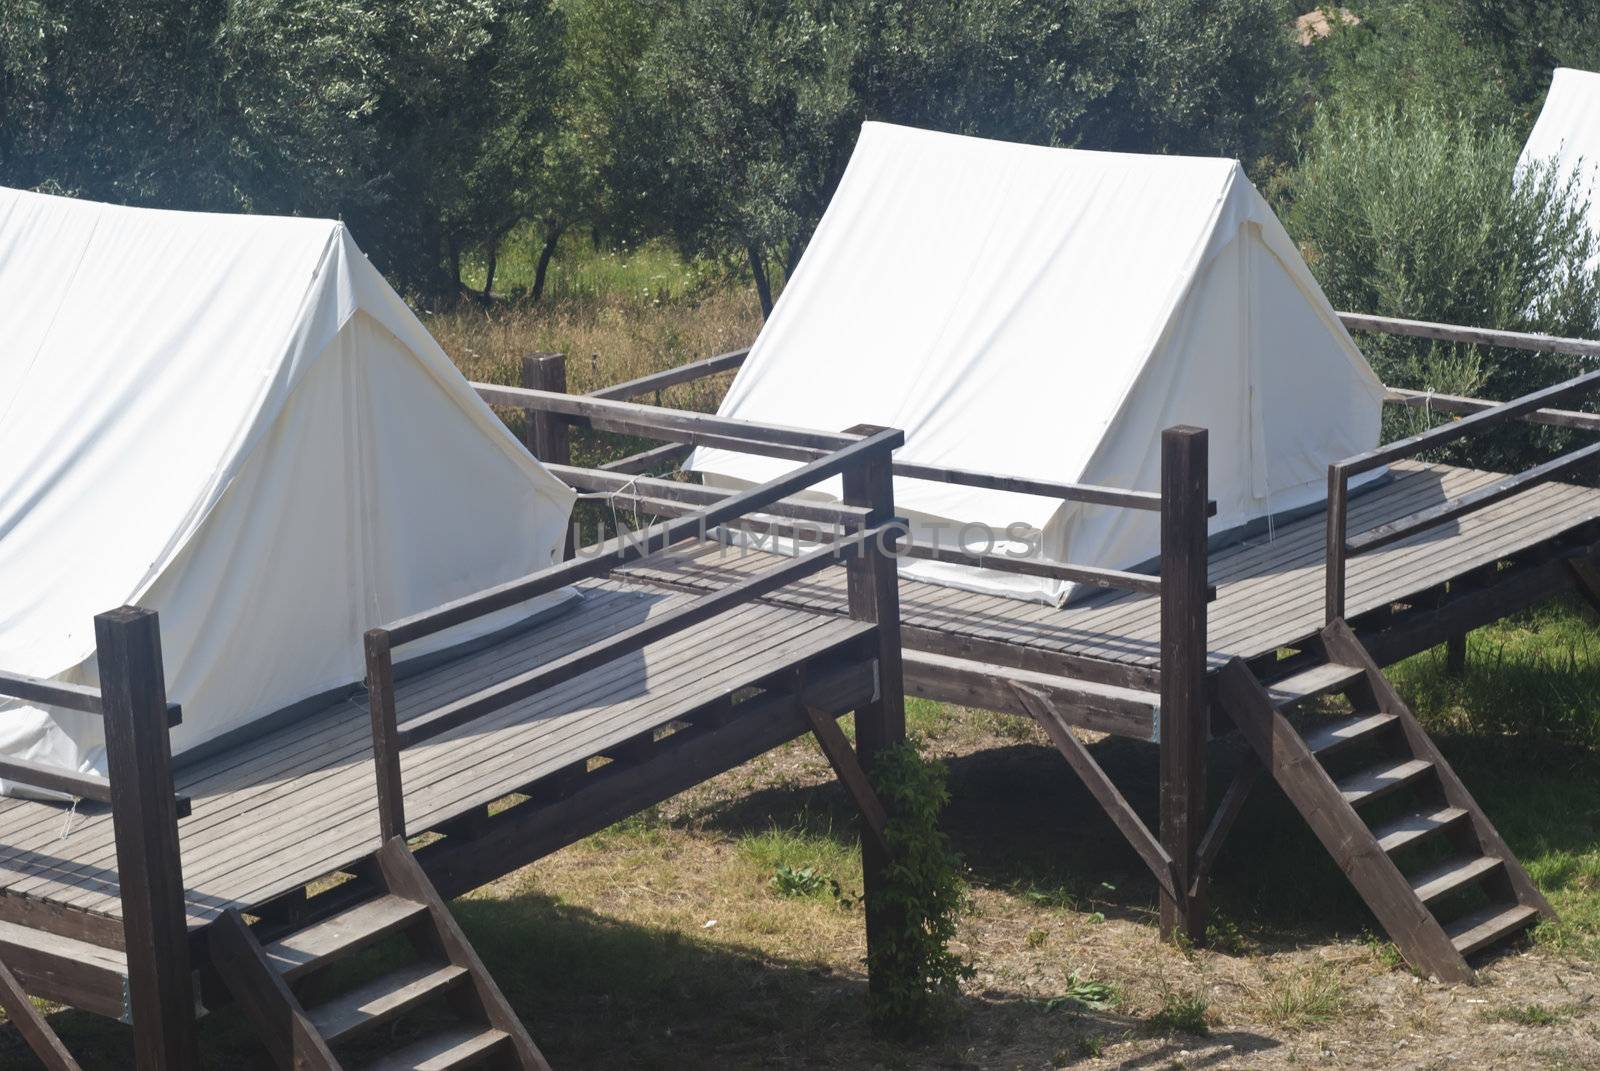 tents in camping by gandolfocannatella